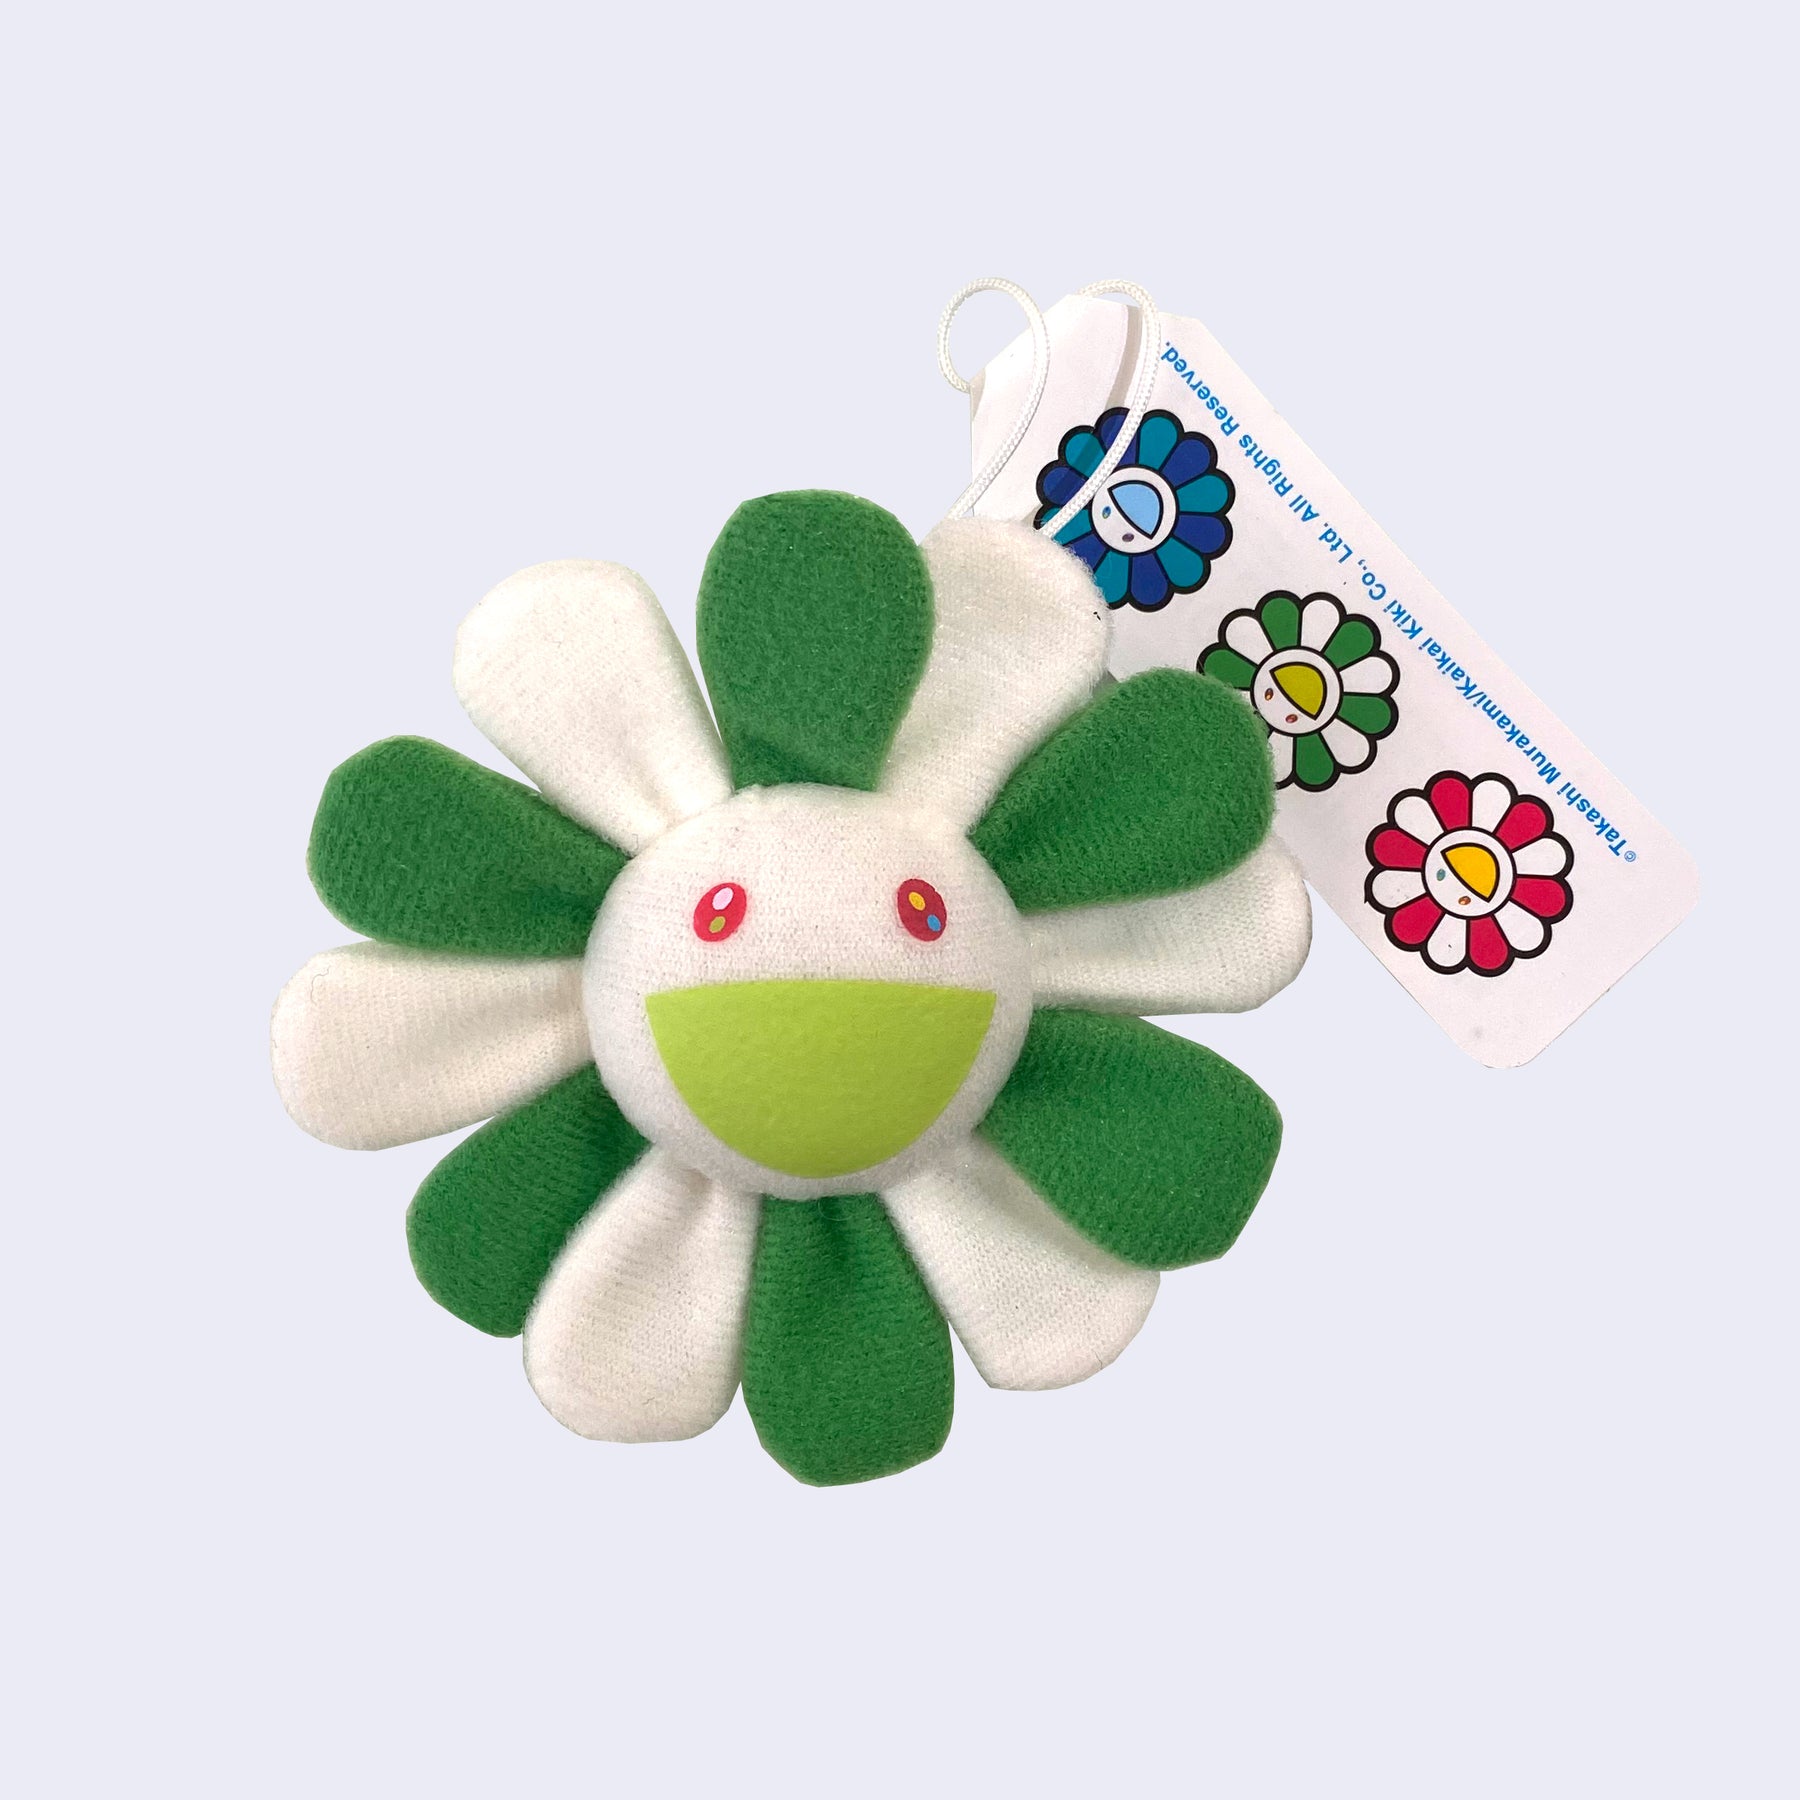 takashi murakami flower keychain or plush pillow / stuffed animal